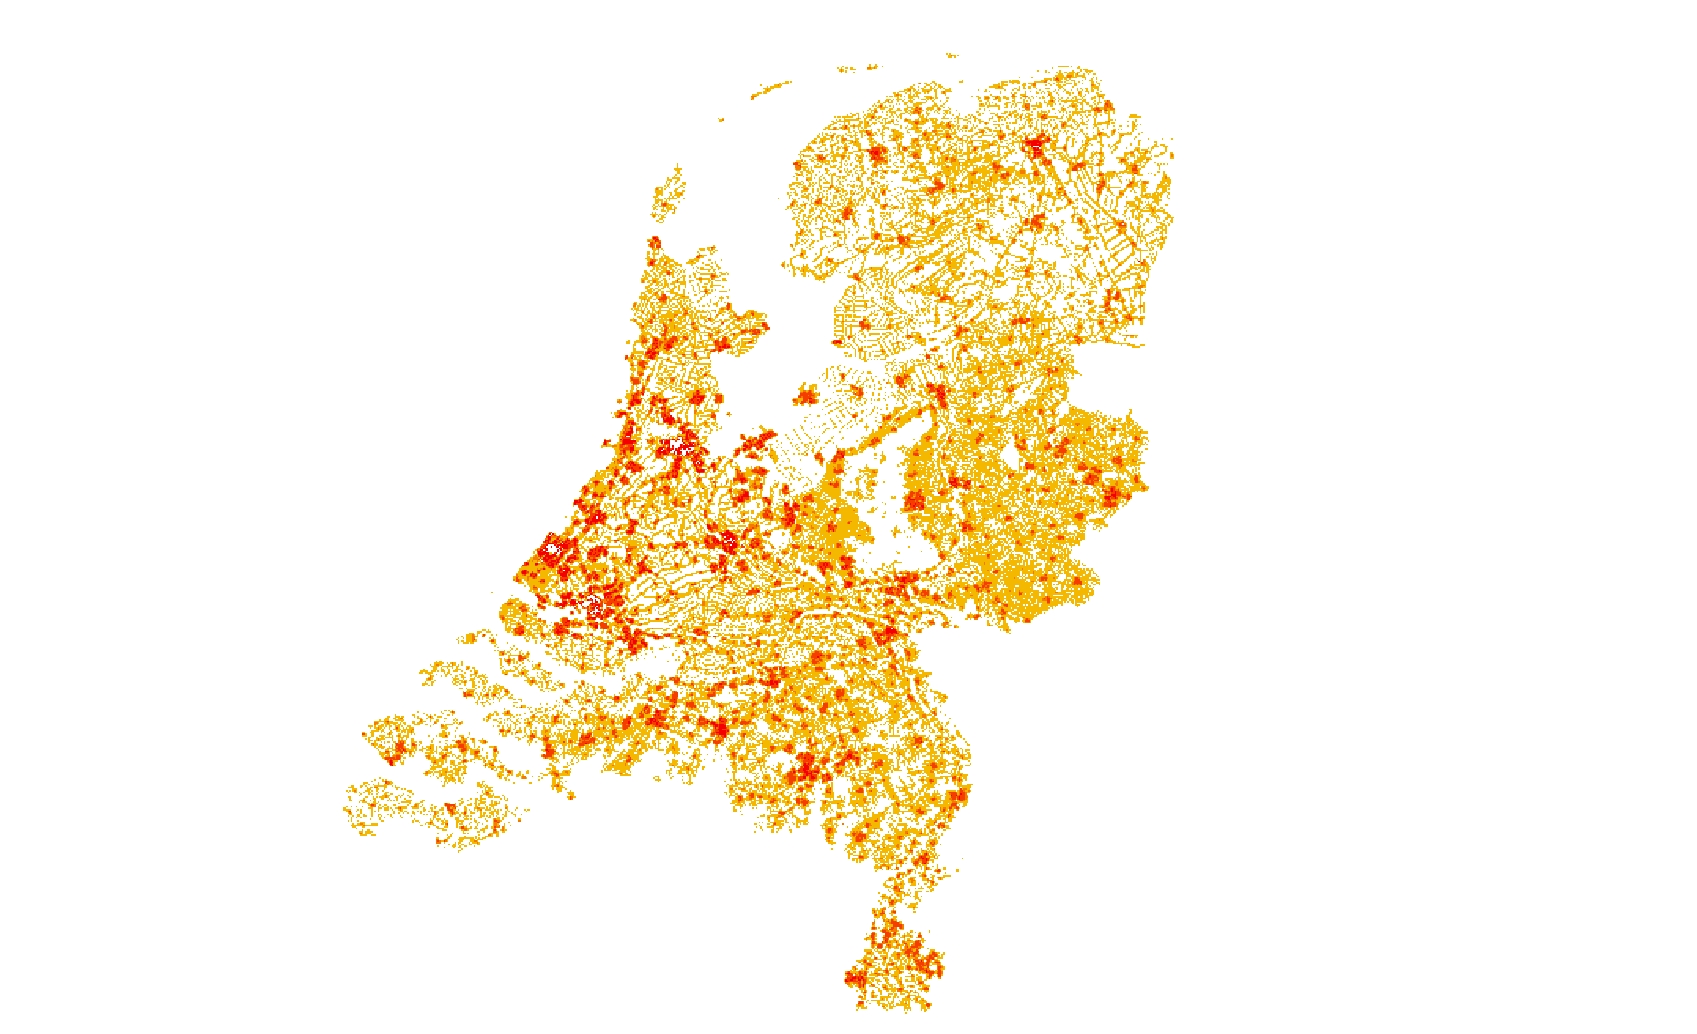 bevolkingsdichtheid Nederland